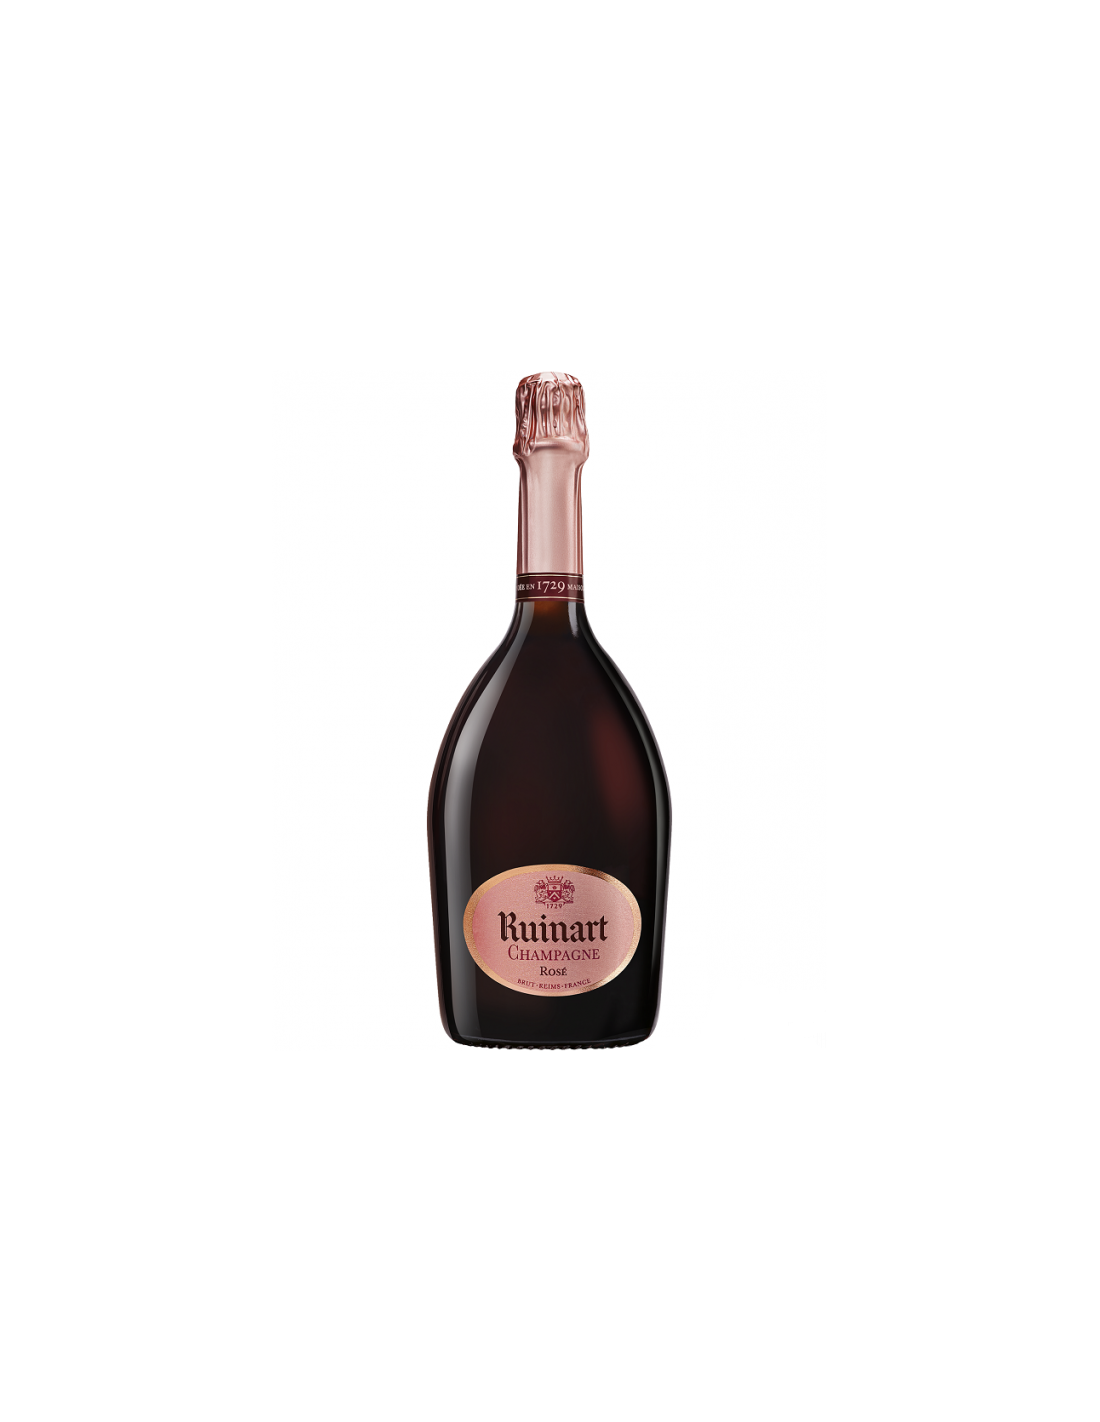 Sampanie roze, Ruinart Champagne, 0.75L, 12.5% alc., Franta alcooldiscount.ro